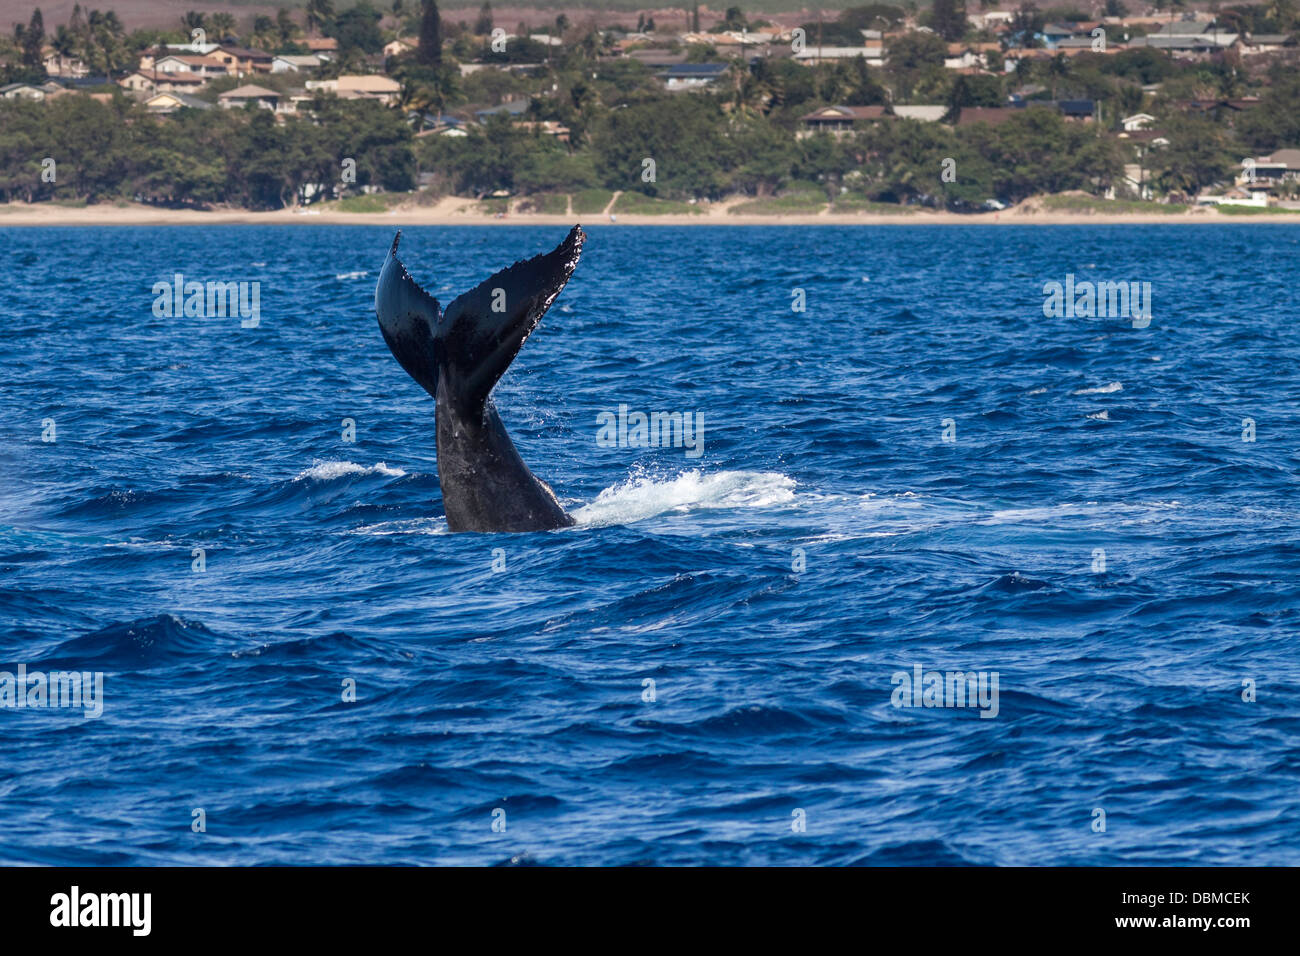 Humpback Whale, Megaptera novaeangliae, breaching off the Western Coast of the island of Maui in Hawaii. Stock Photo